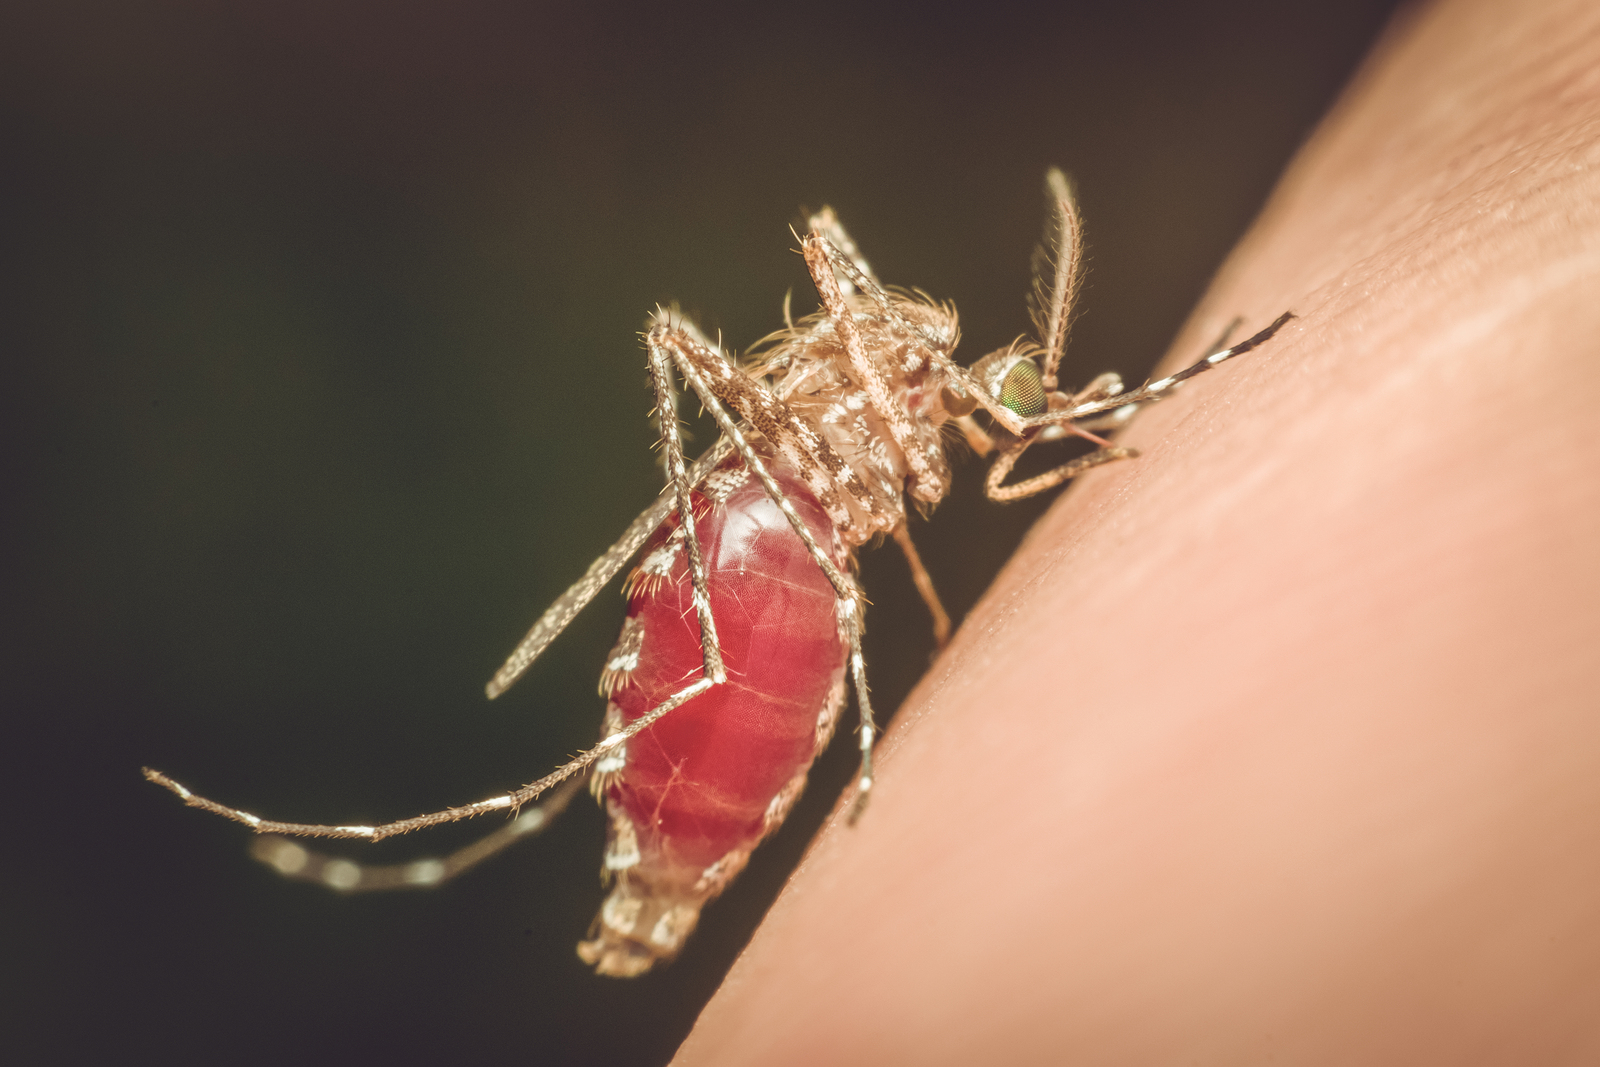 Avoiding Mosquito-Borne Diseases